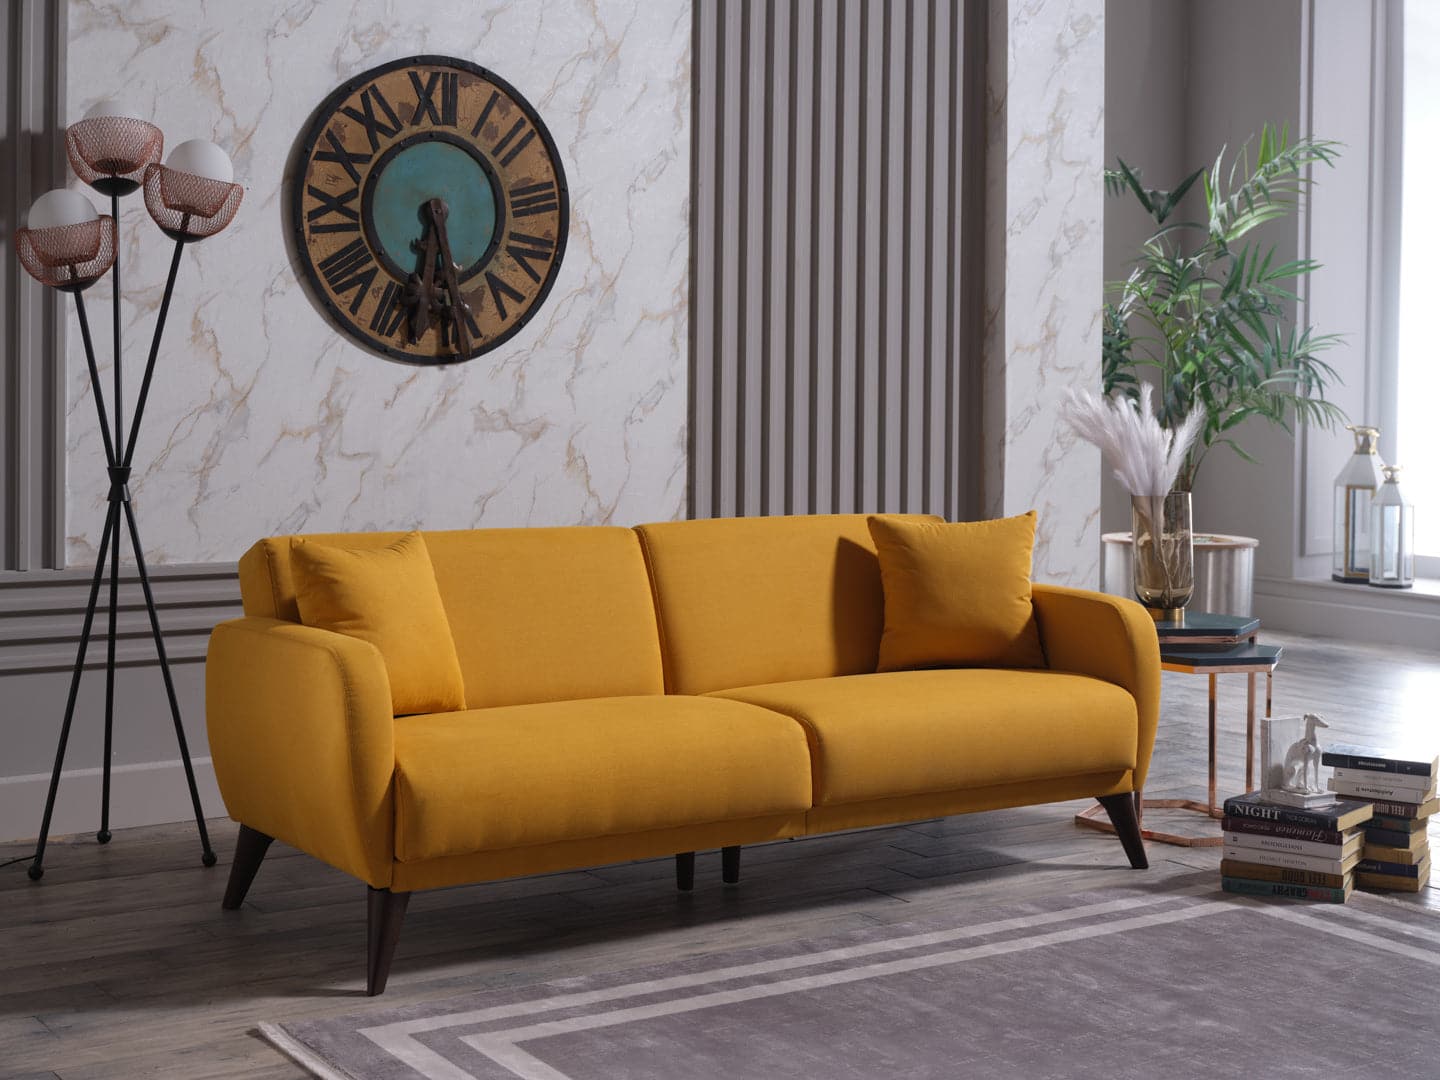 Flexy Sofa In A Box - Charcoal